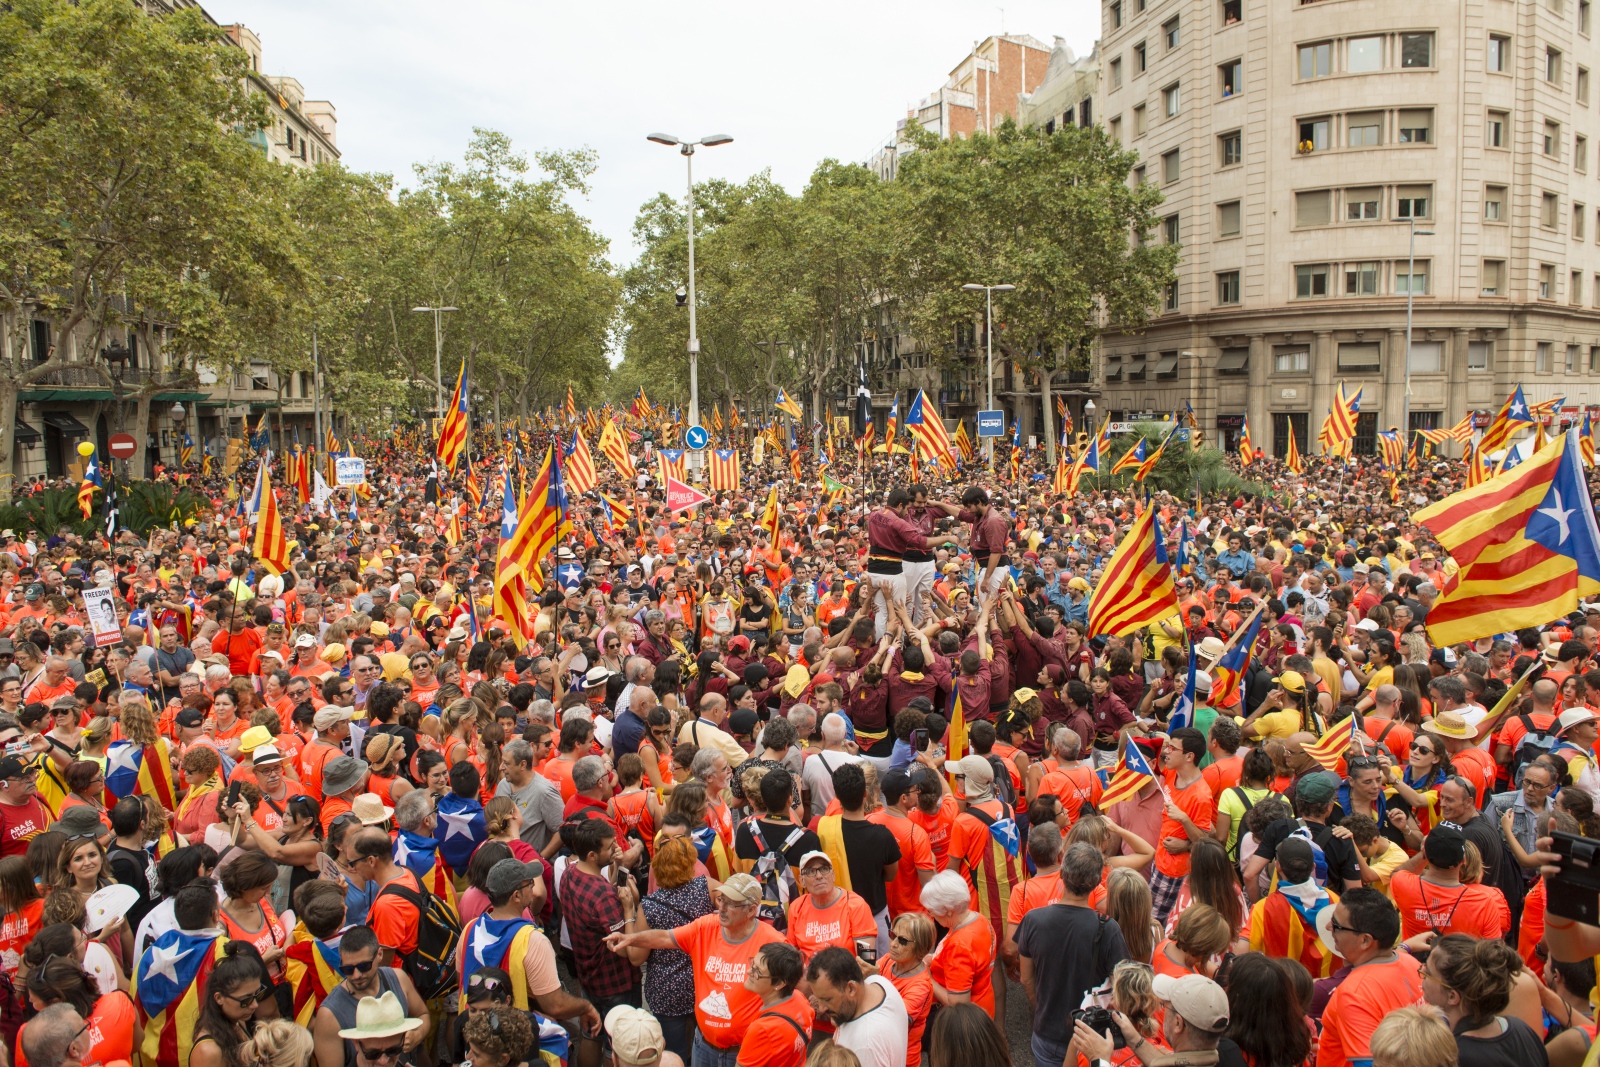 09.11.18 Over 1 million Catalu&a_e release of political prisoners